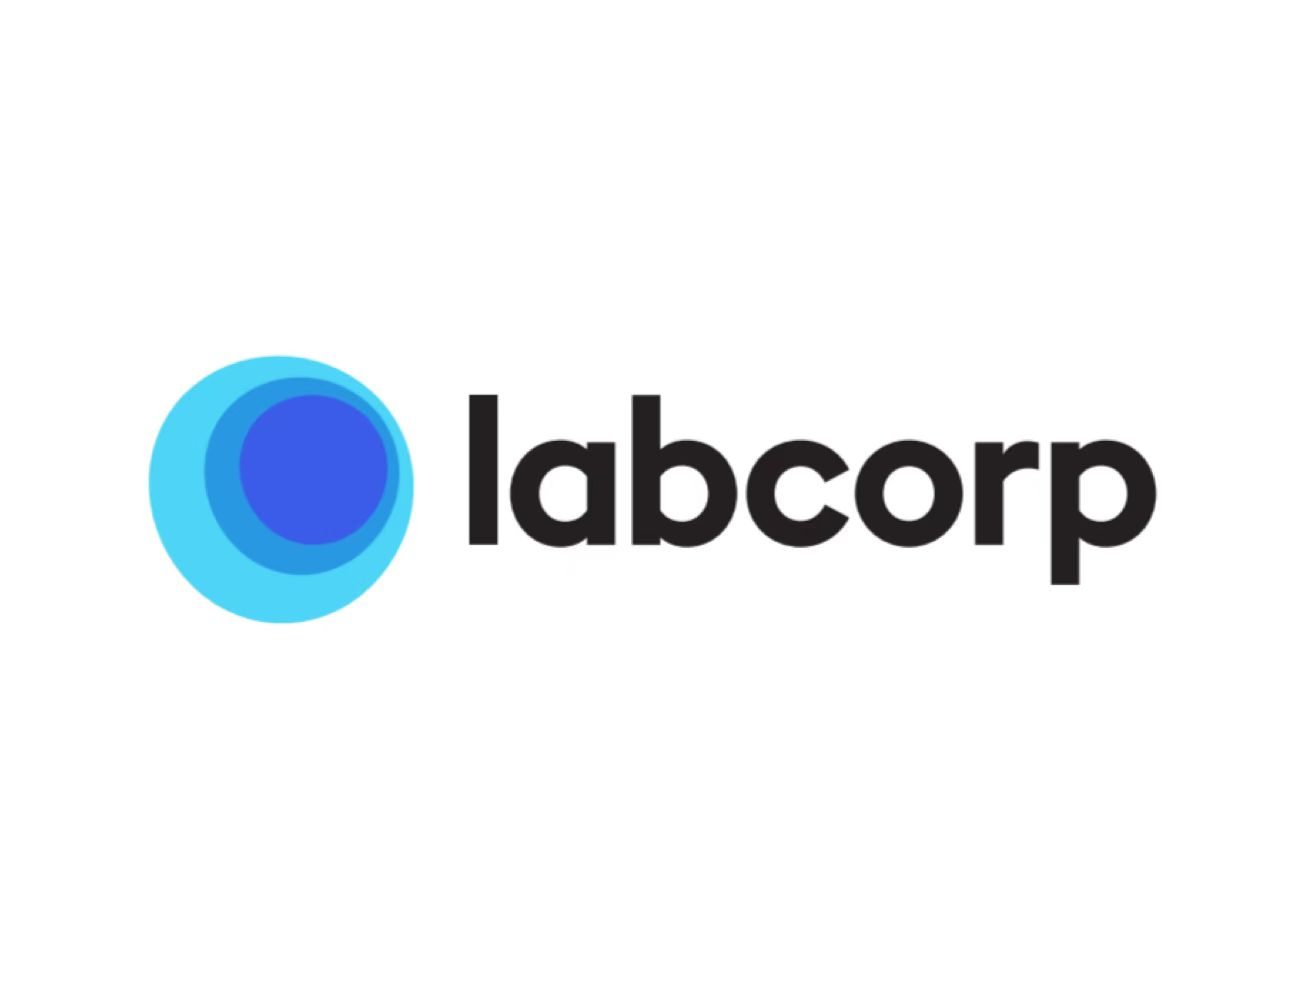 Labcorp Announces Acquisition of Select Assets of BioReference Healths Diagnostics Business